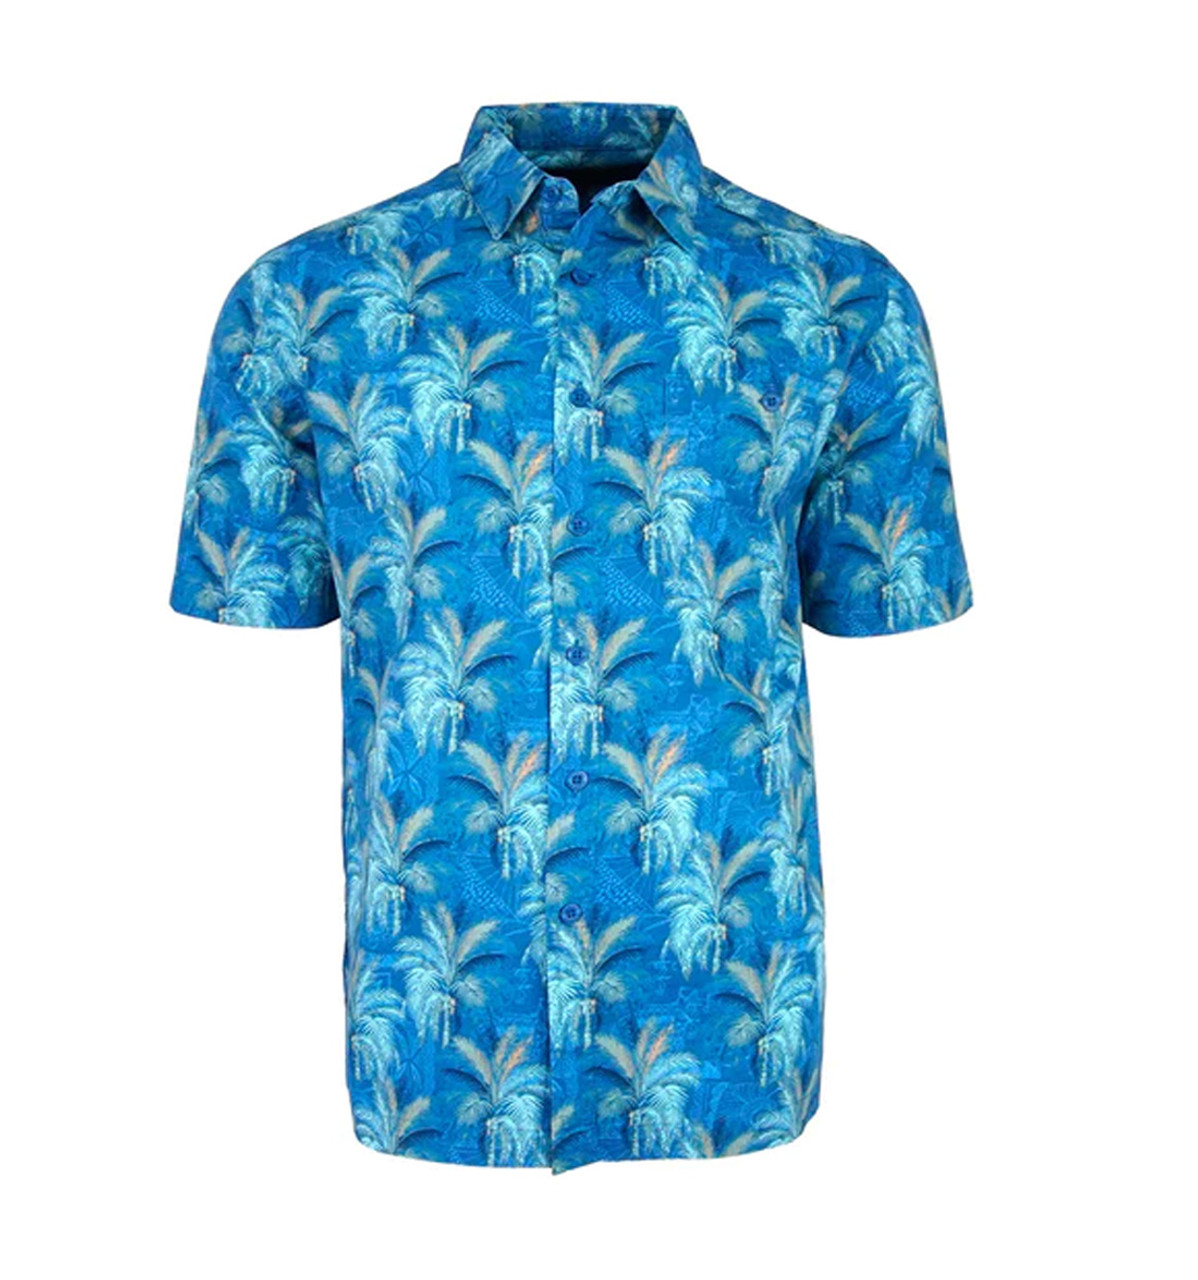 Windy Palms Print Shirt by Weekender - Blue - Captains Landing